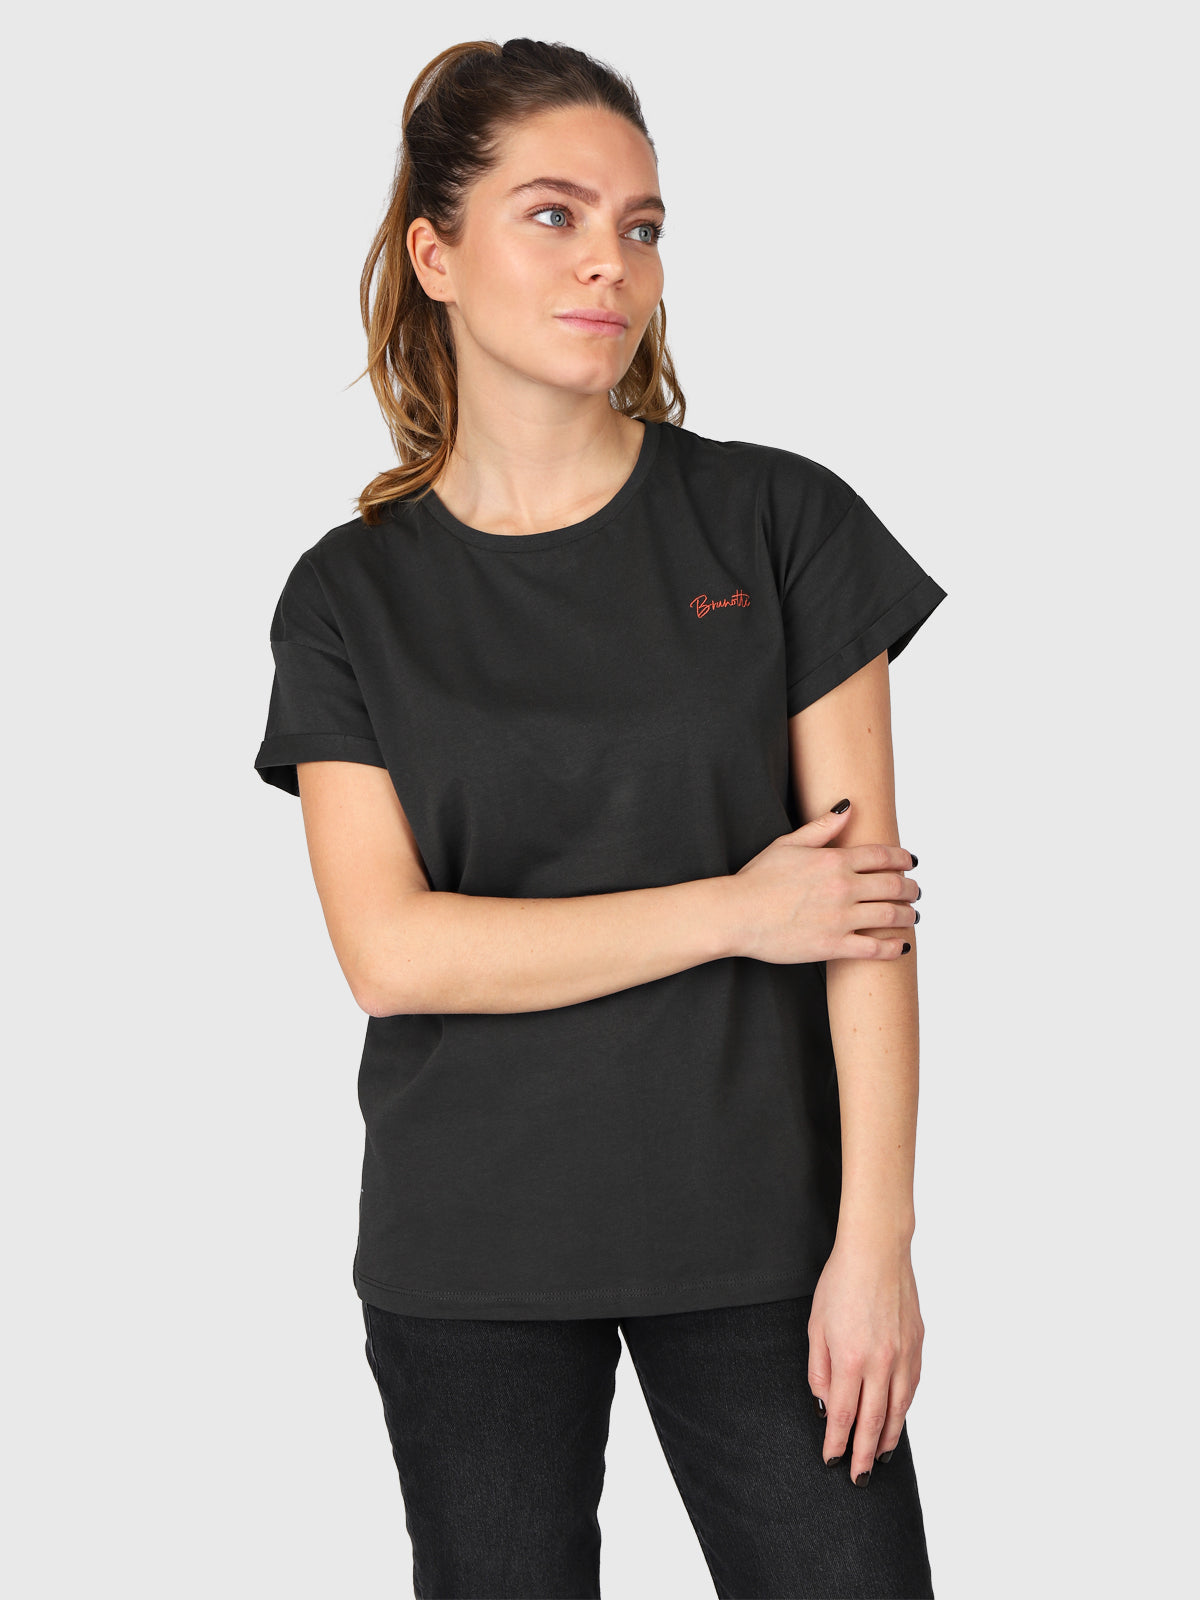 Samillia-R Damen T-shirt | Schwarz